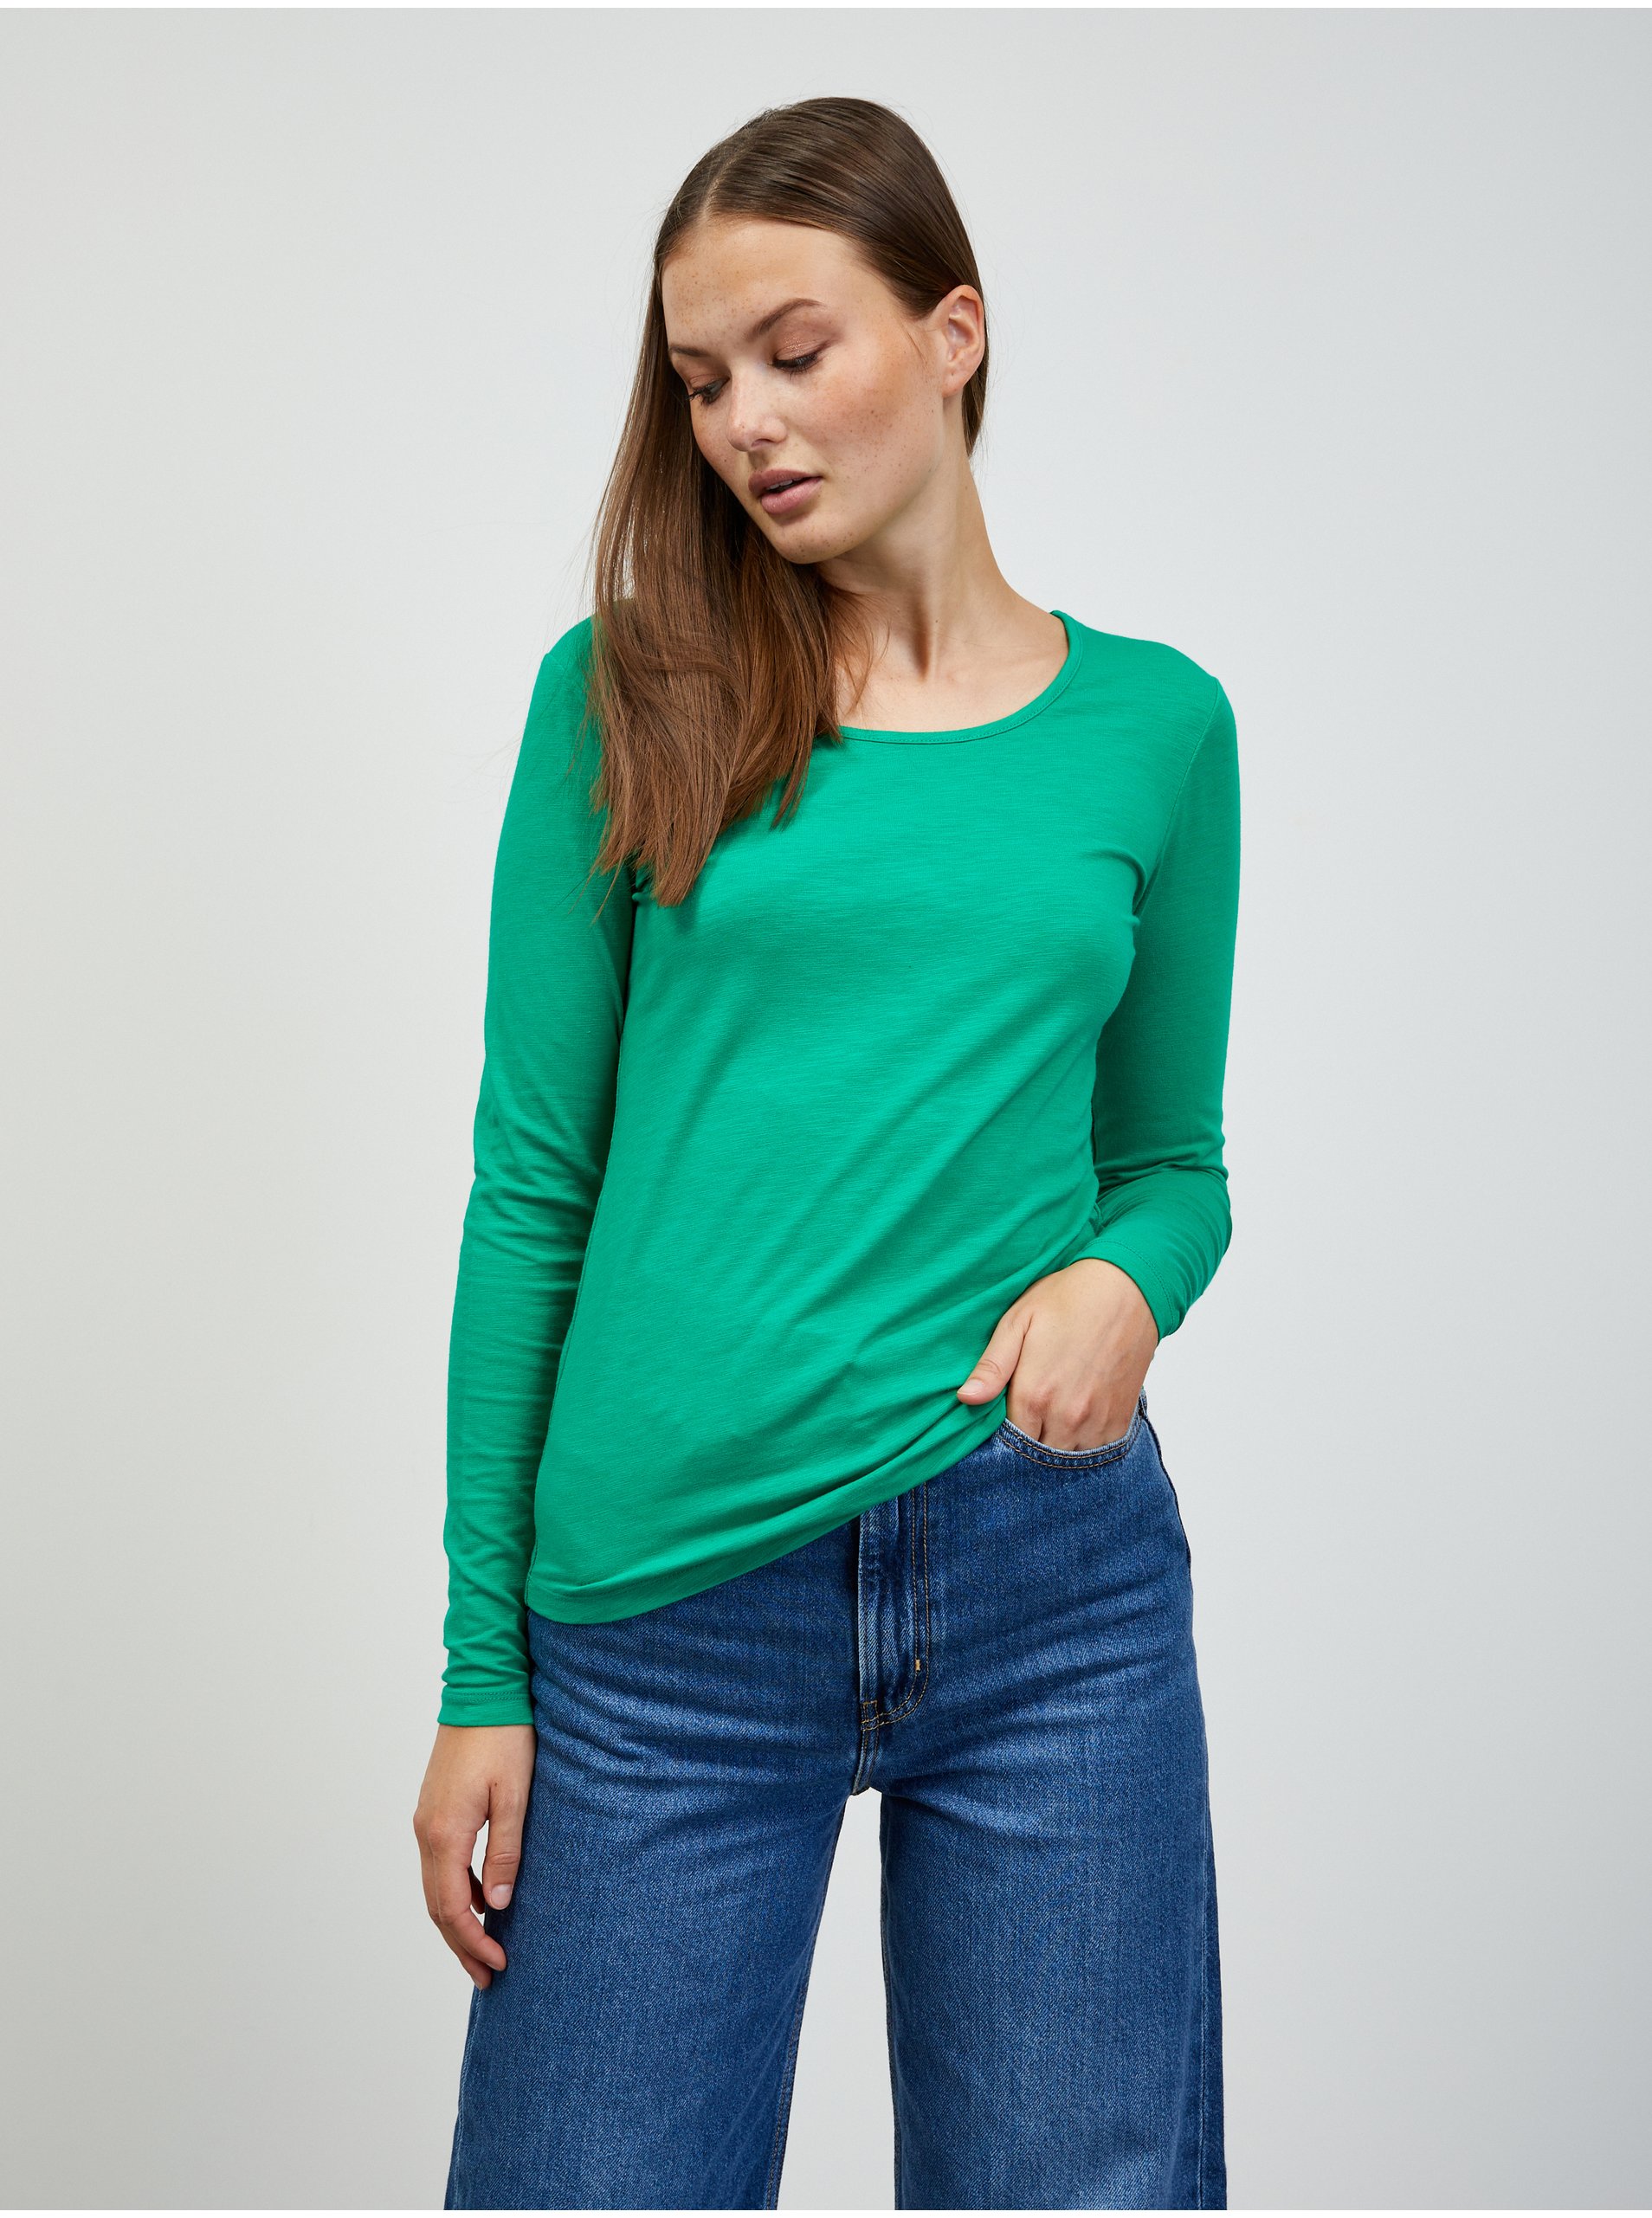 Lacno Zelené dámske basic tričko s dlhým rukávom ZOOT.lab Molly